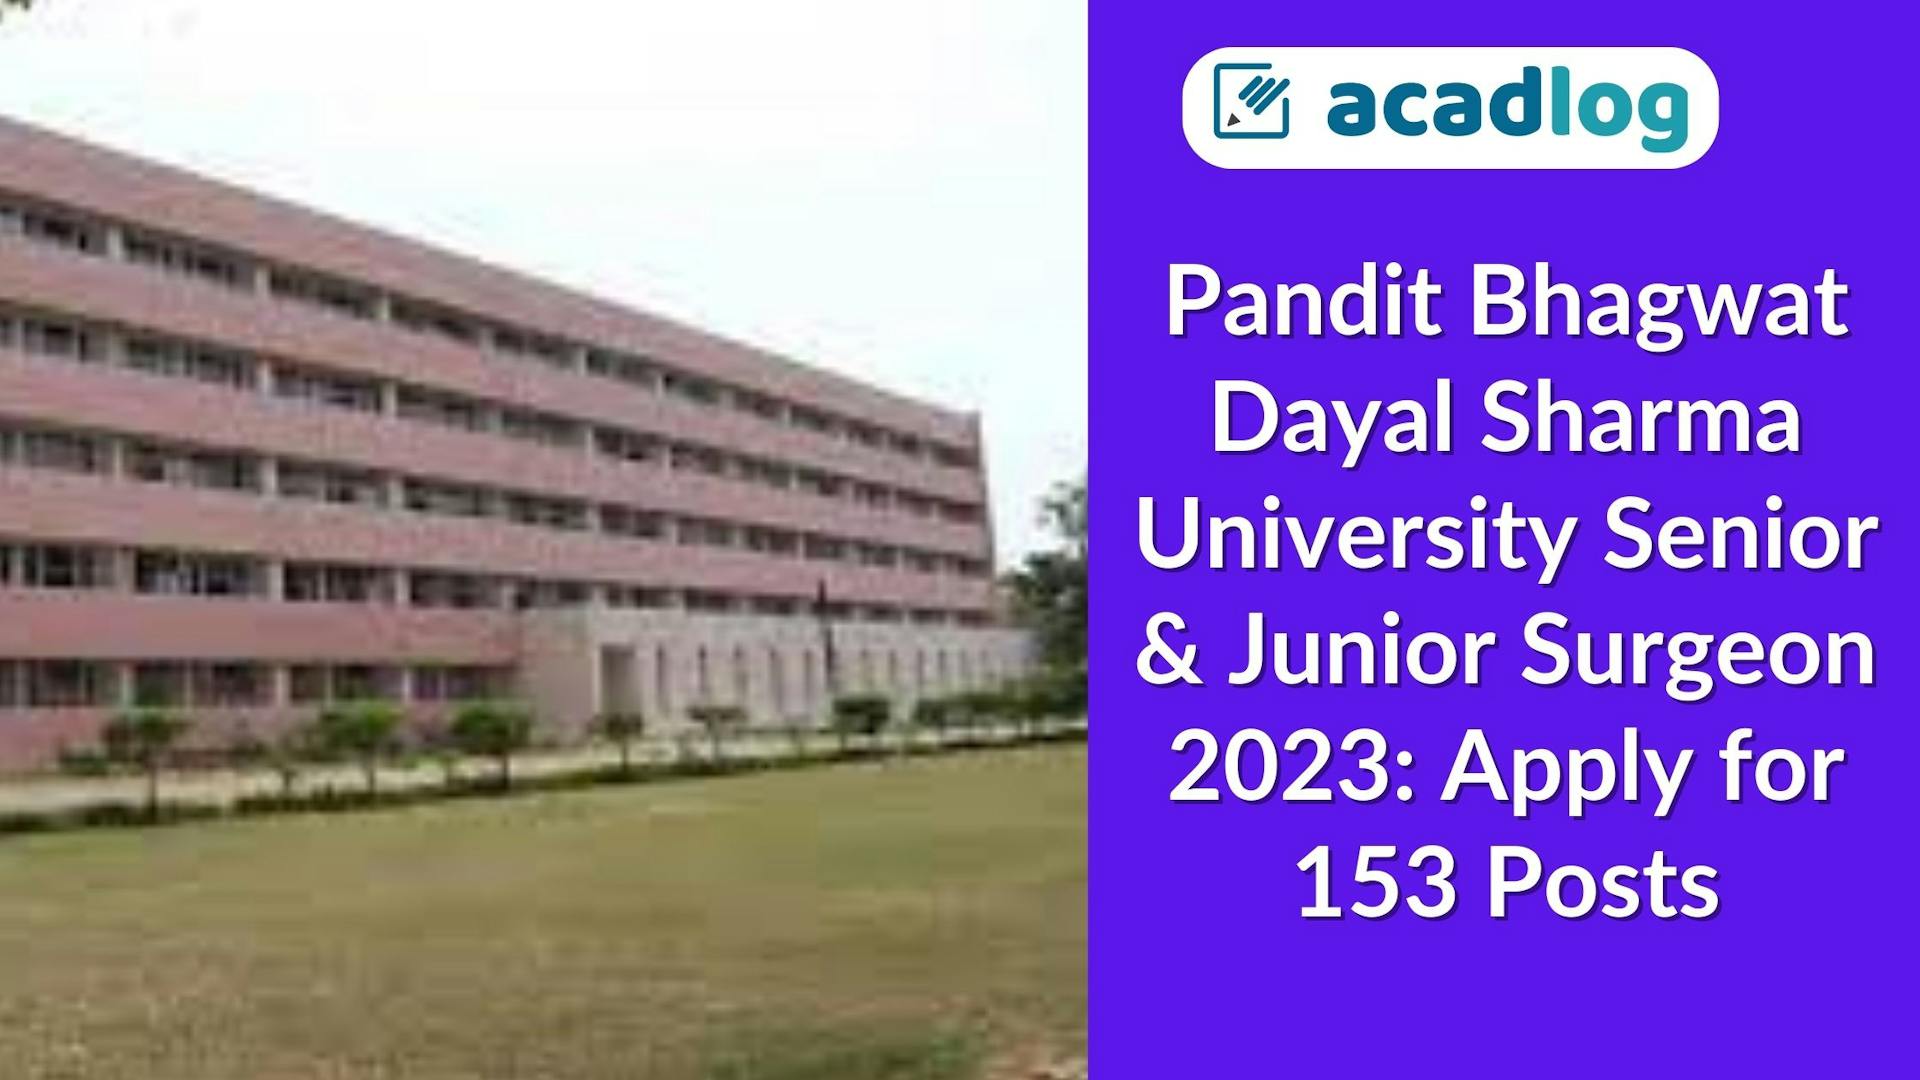 Pandit Bhagwat Dayal Sharma University Senior & Junior Surgeon 2023: Apply for 153 Posts